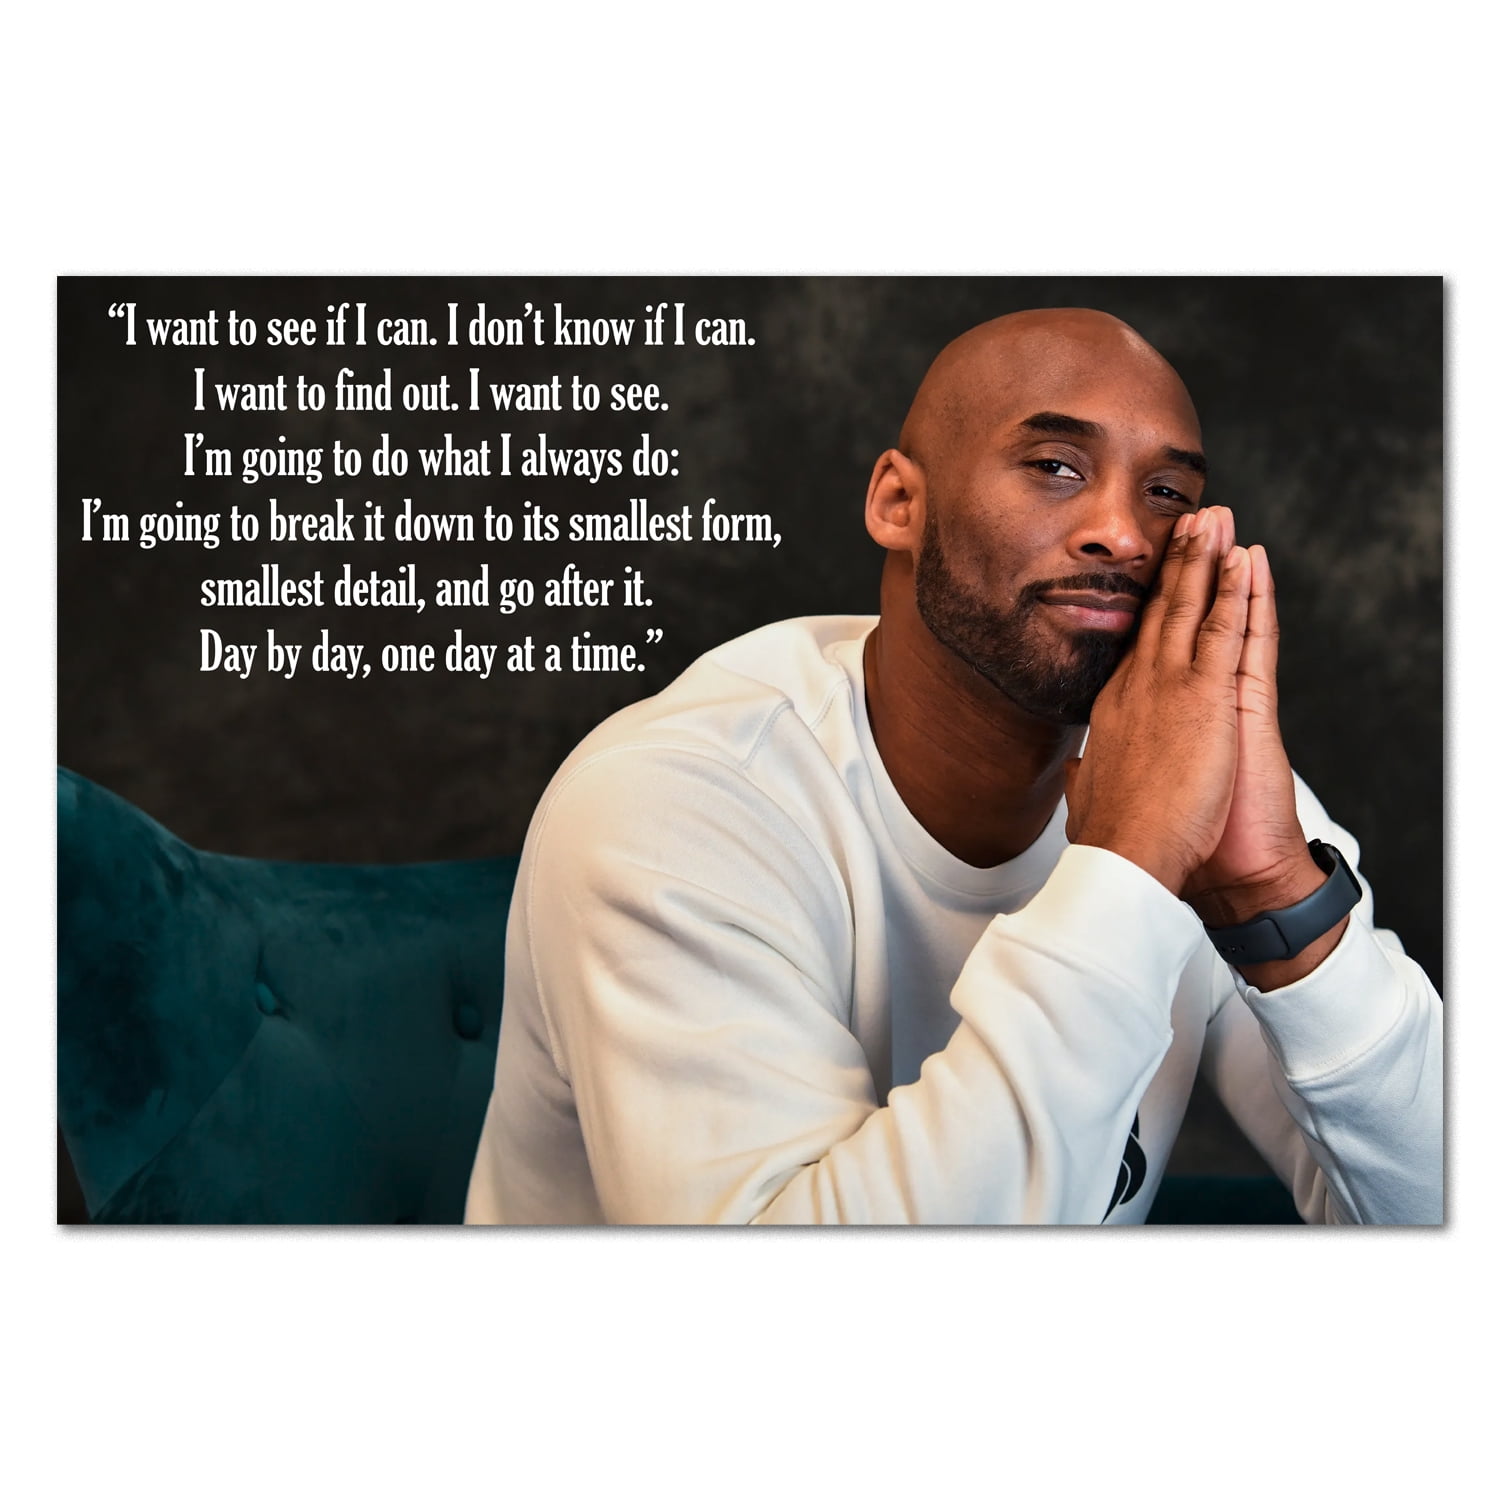 Mamba Mentality - Kobe Bryant (Motivational Video) 